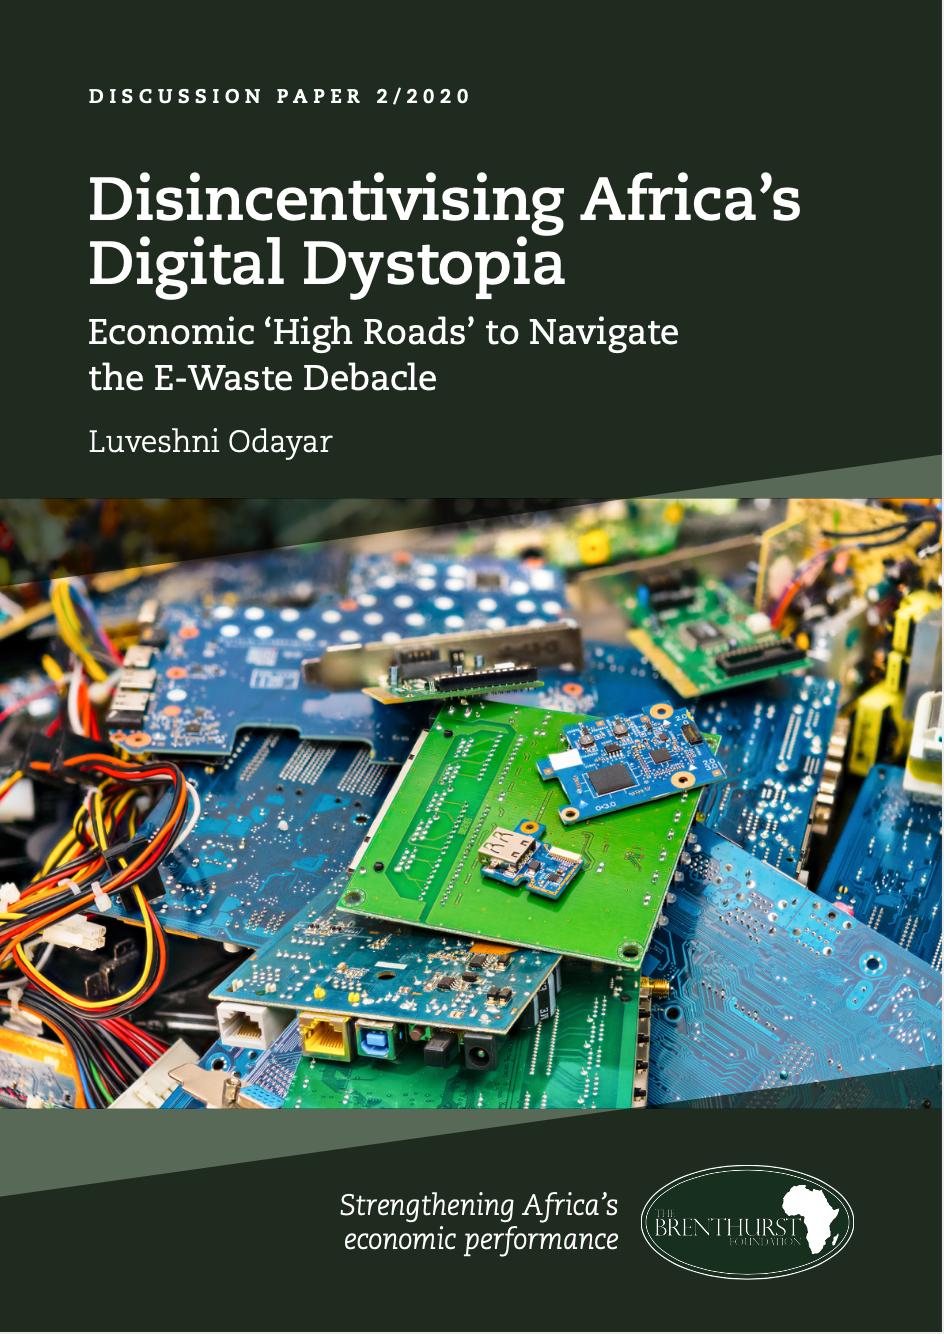 Disincentivizing Africa's Digital Dystopia